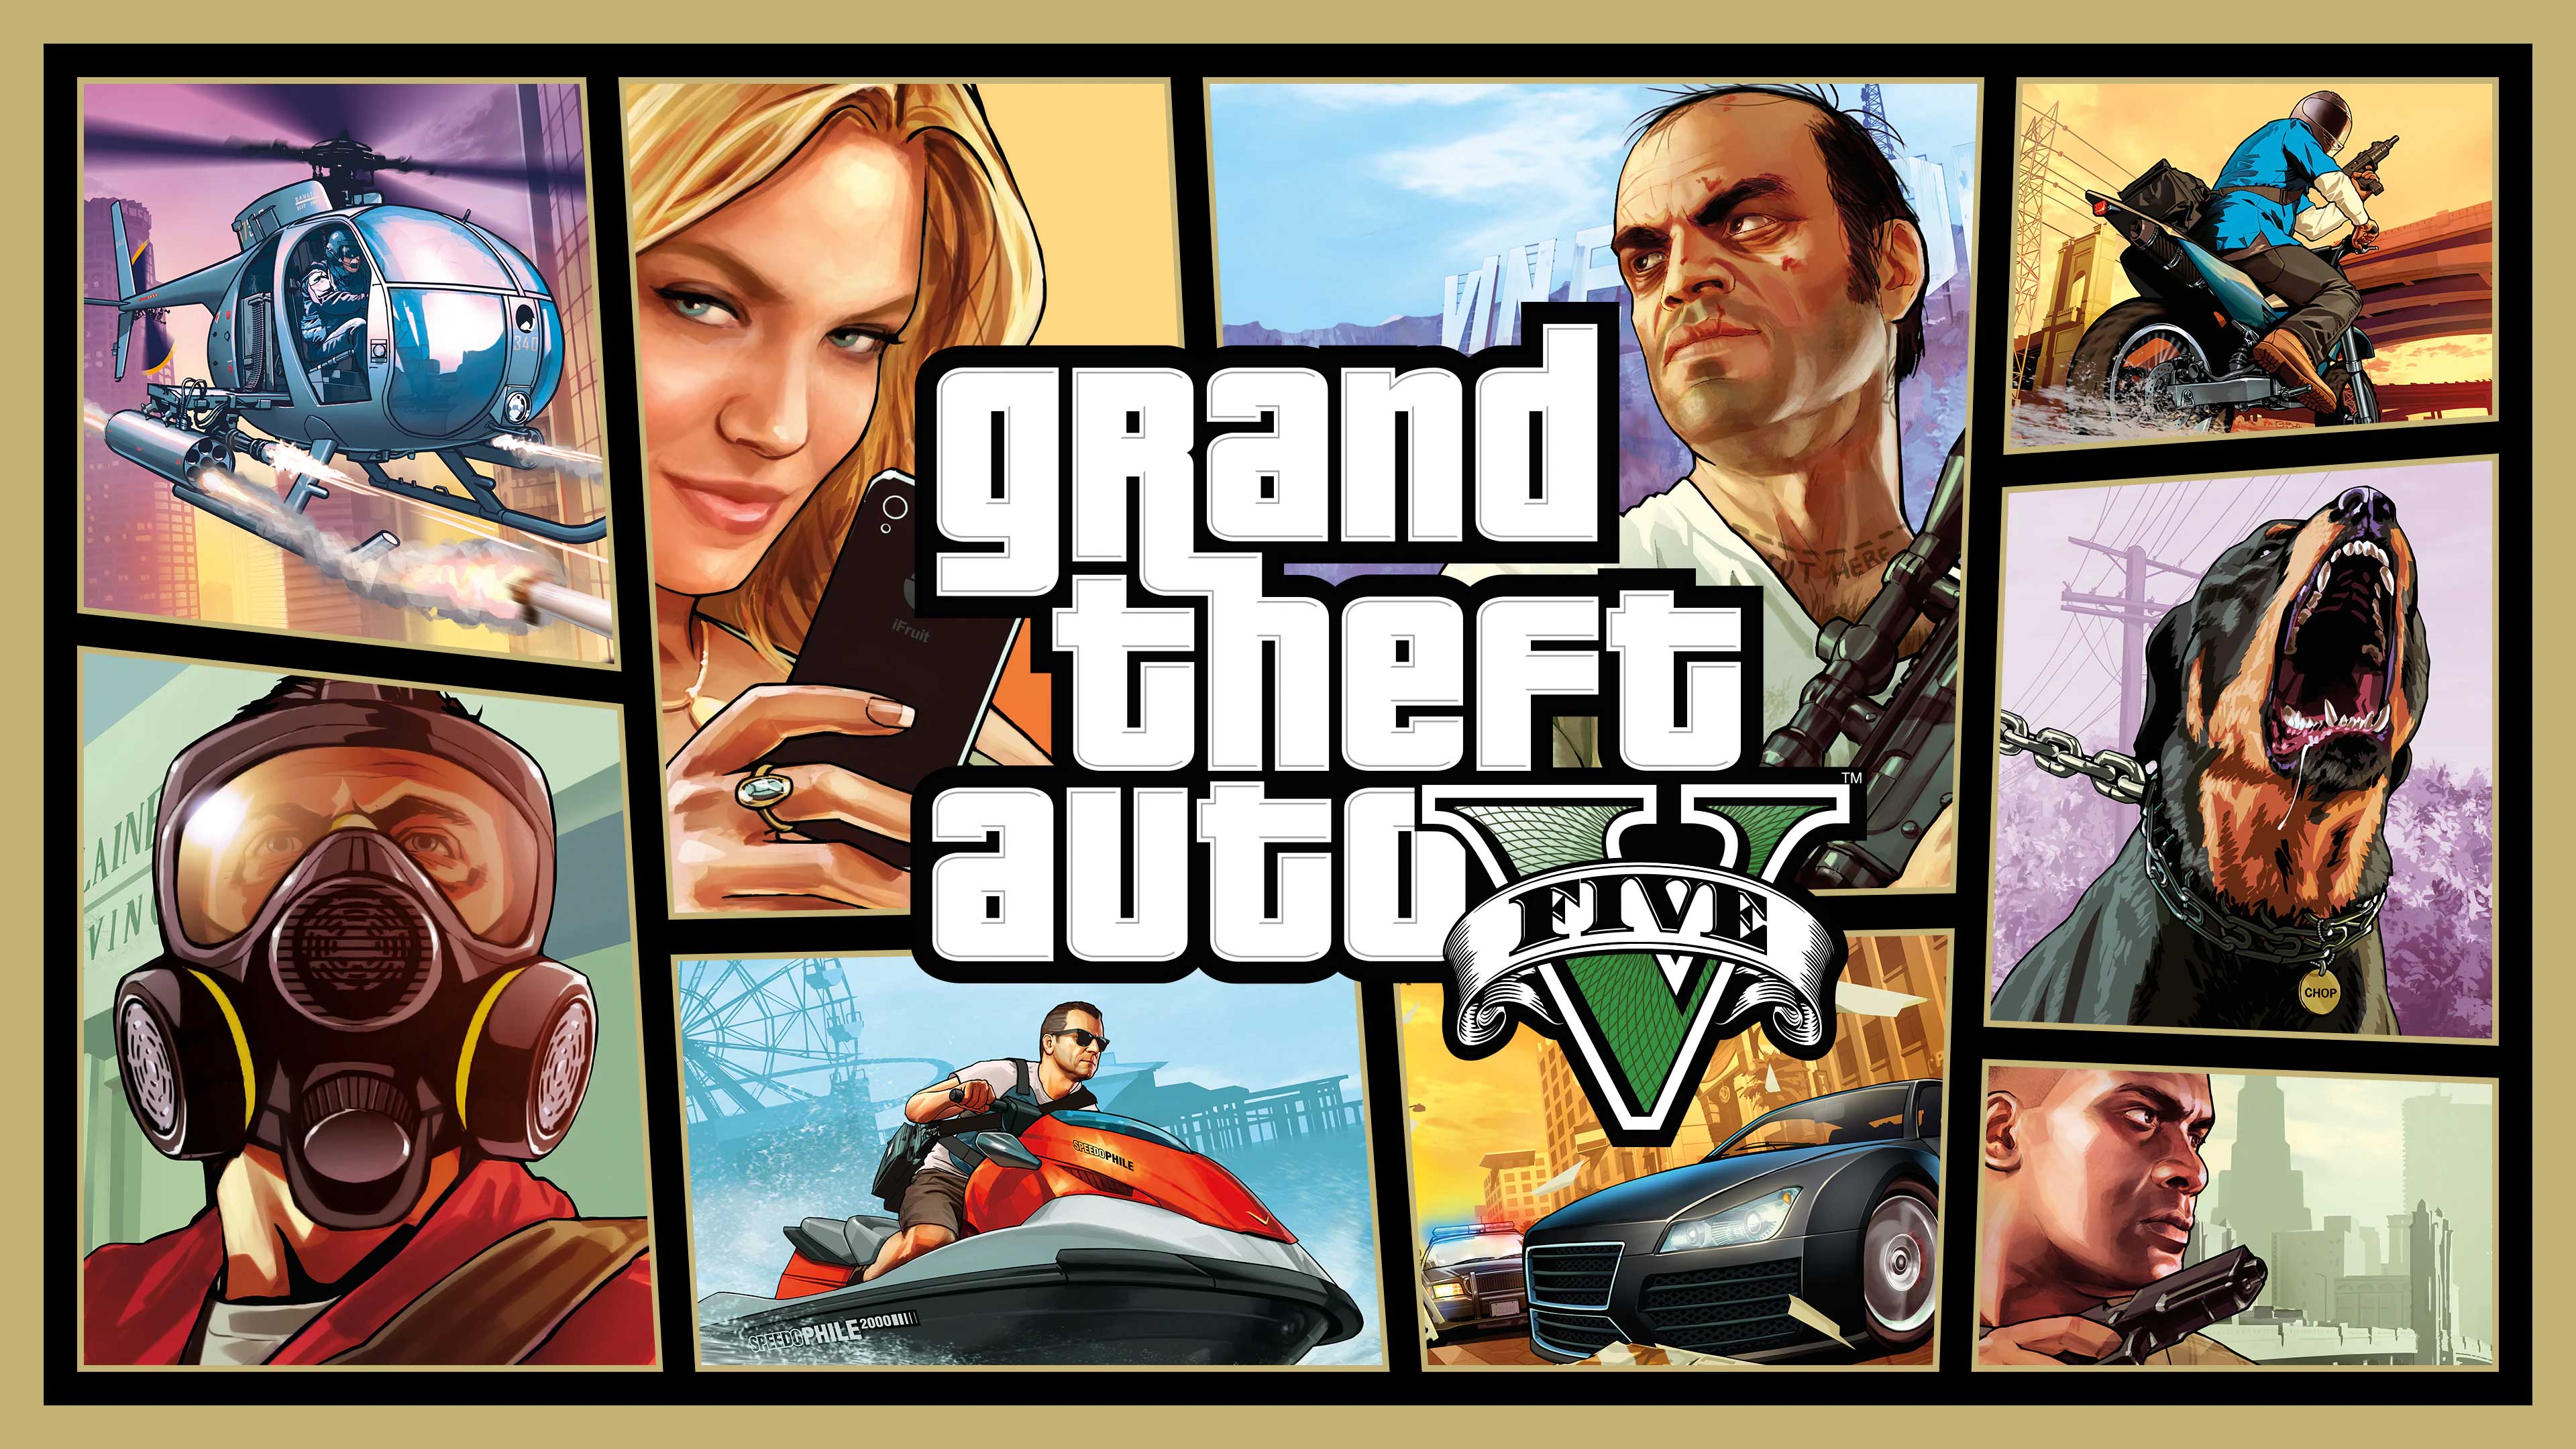 Grand Theft Auto V, Gamers Greeting, gamersgreeting.com